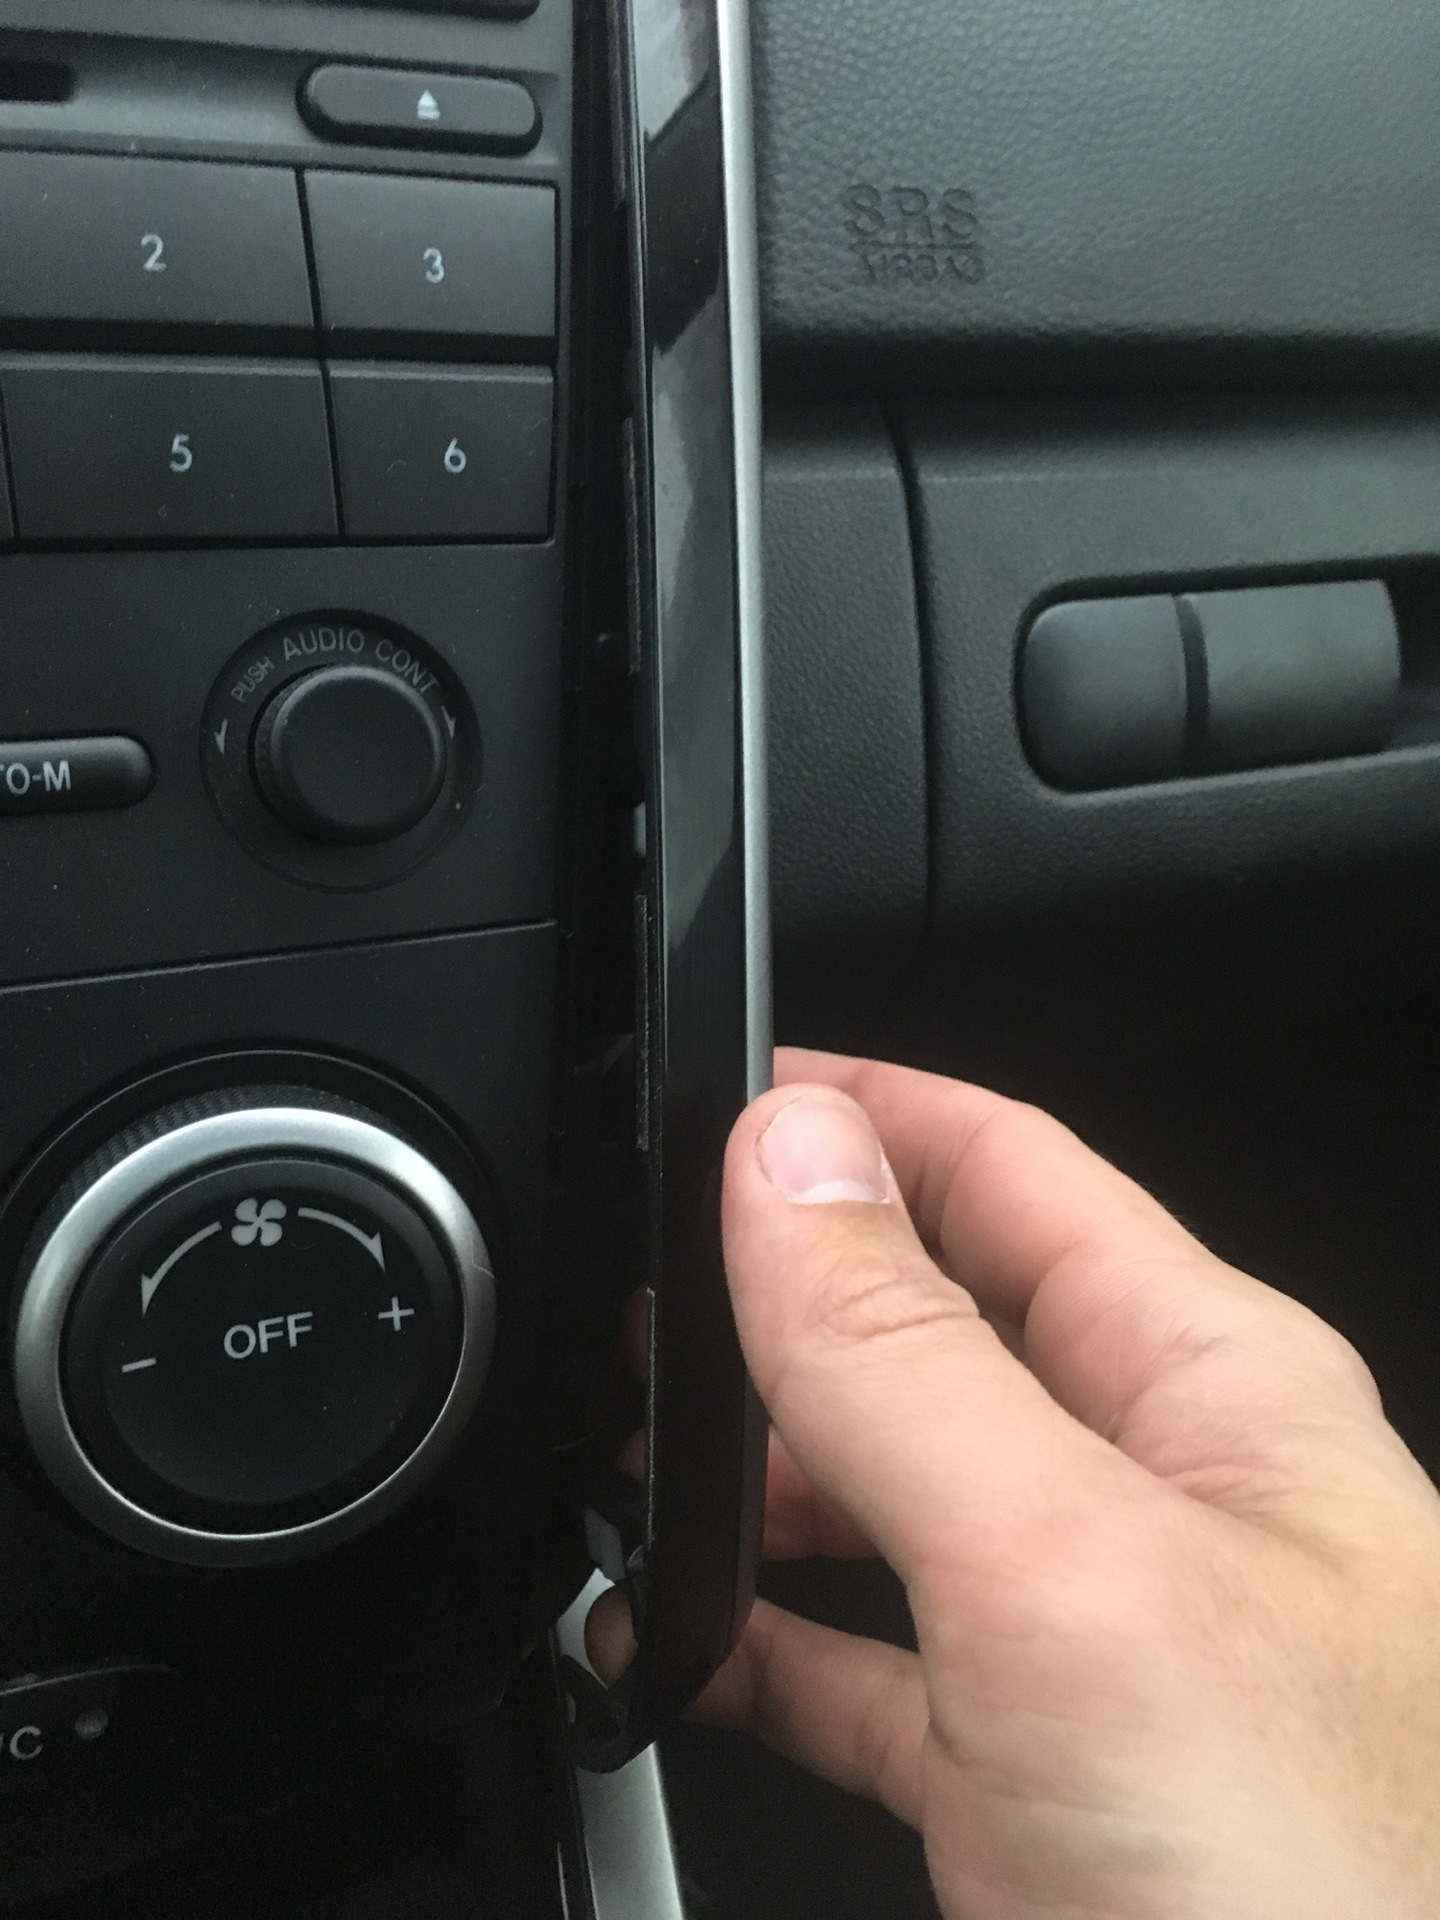 Аварийка мазды. Кнопка центрального замка Mazda CX-7 подсветка. Подсветка кнопок стеклоподъёмников Mazda CX-7. Mazda CX-7 кнопки. Подсветка кнопок Мазда сх7.